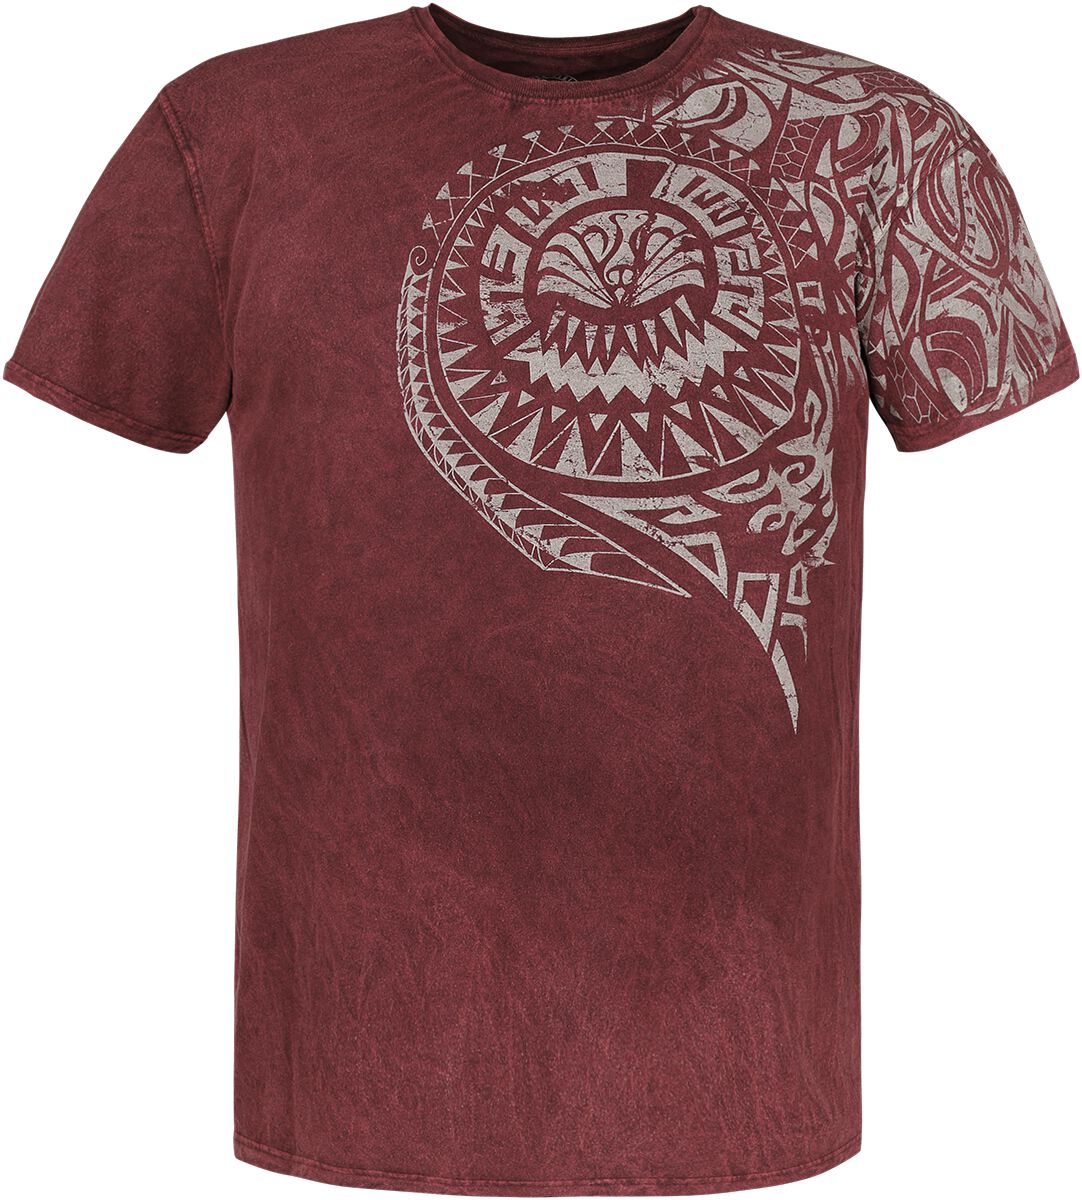 Outer Vision T-Shirt - Burned Tattoo - S bis 4XL - für Männer - Größe L - rot